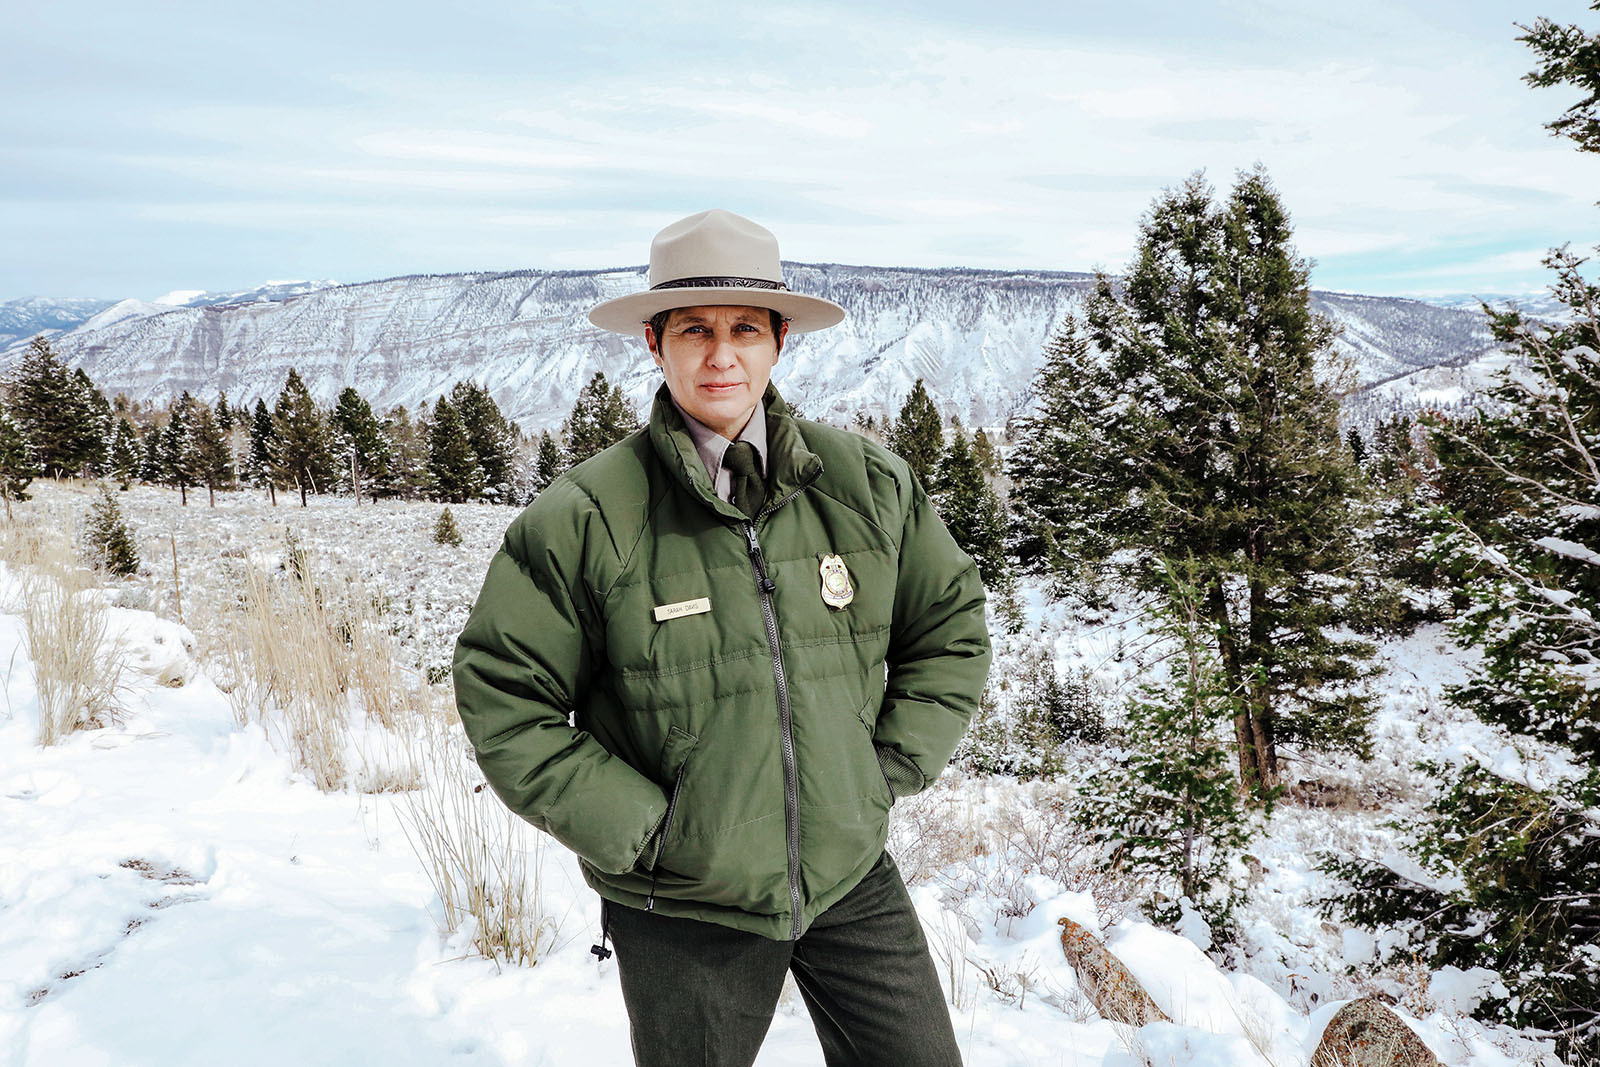 Sarah Davis 94, Chief Ranger at Yellowstone National Park